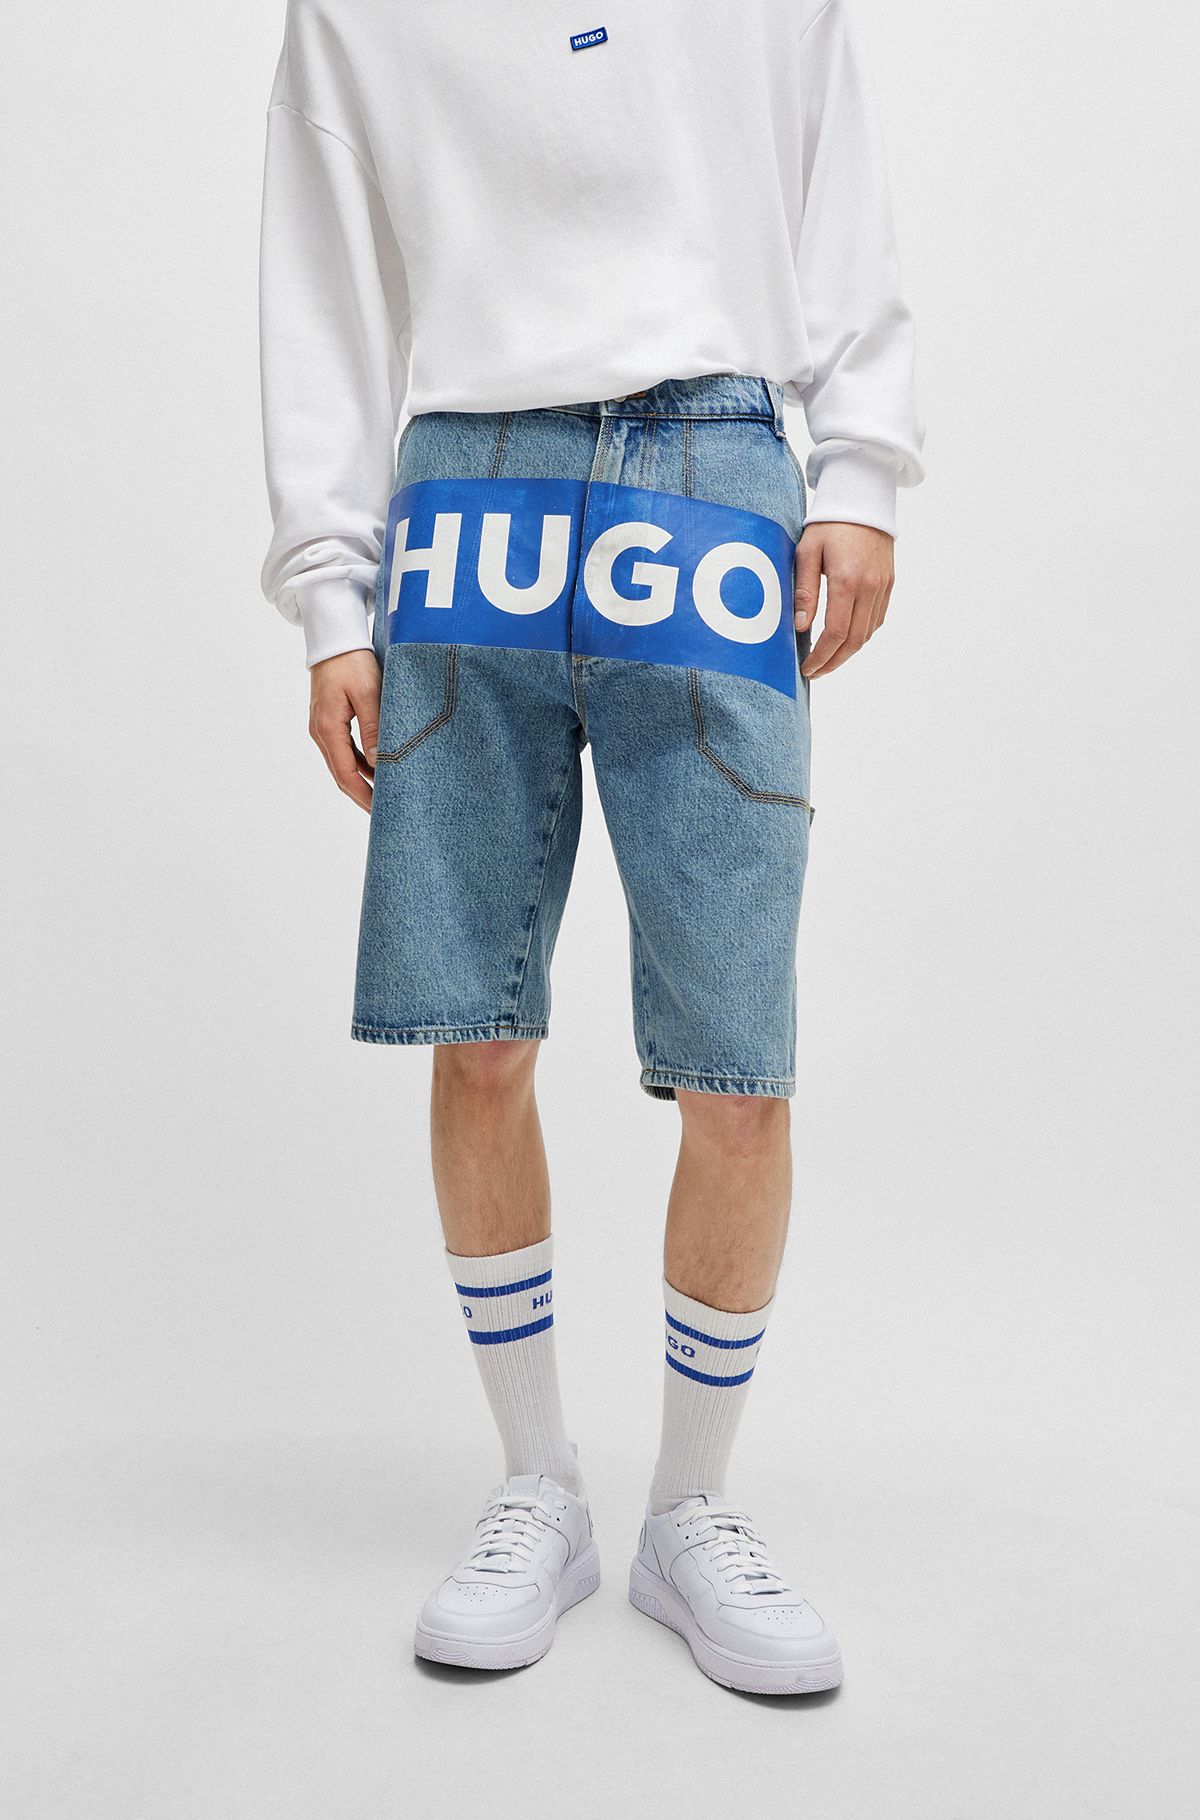 Hugo Boss Sweat Shorts Medium Navy Blue Setowel XL Holiday